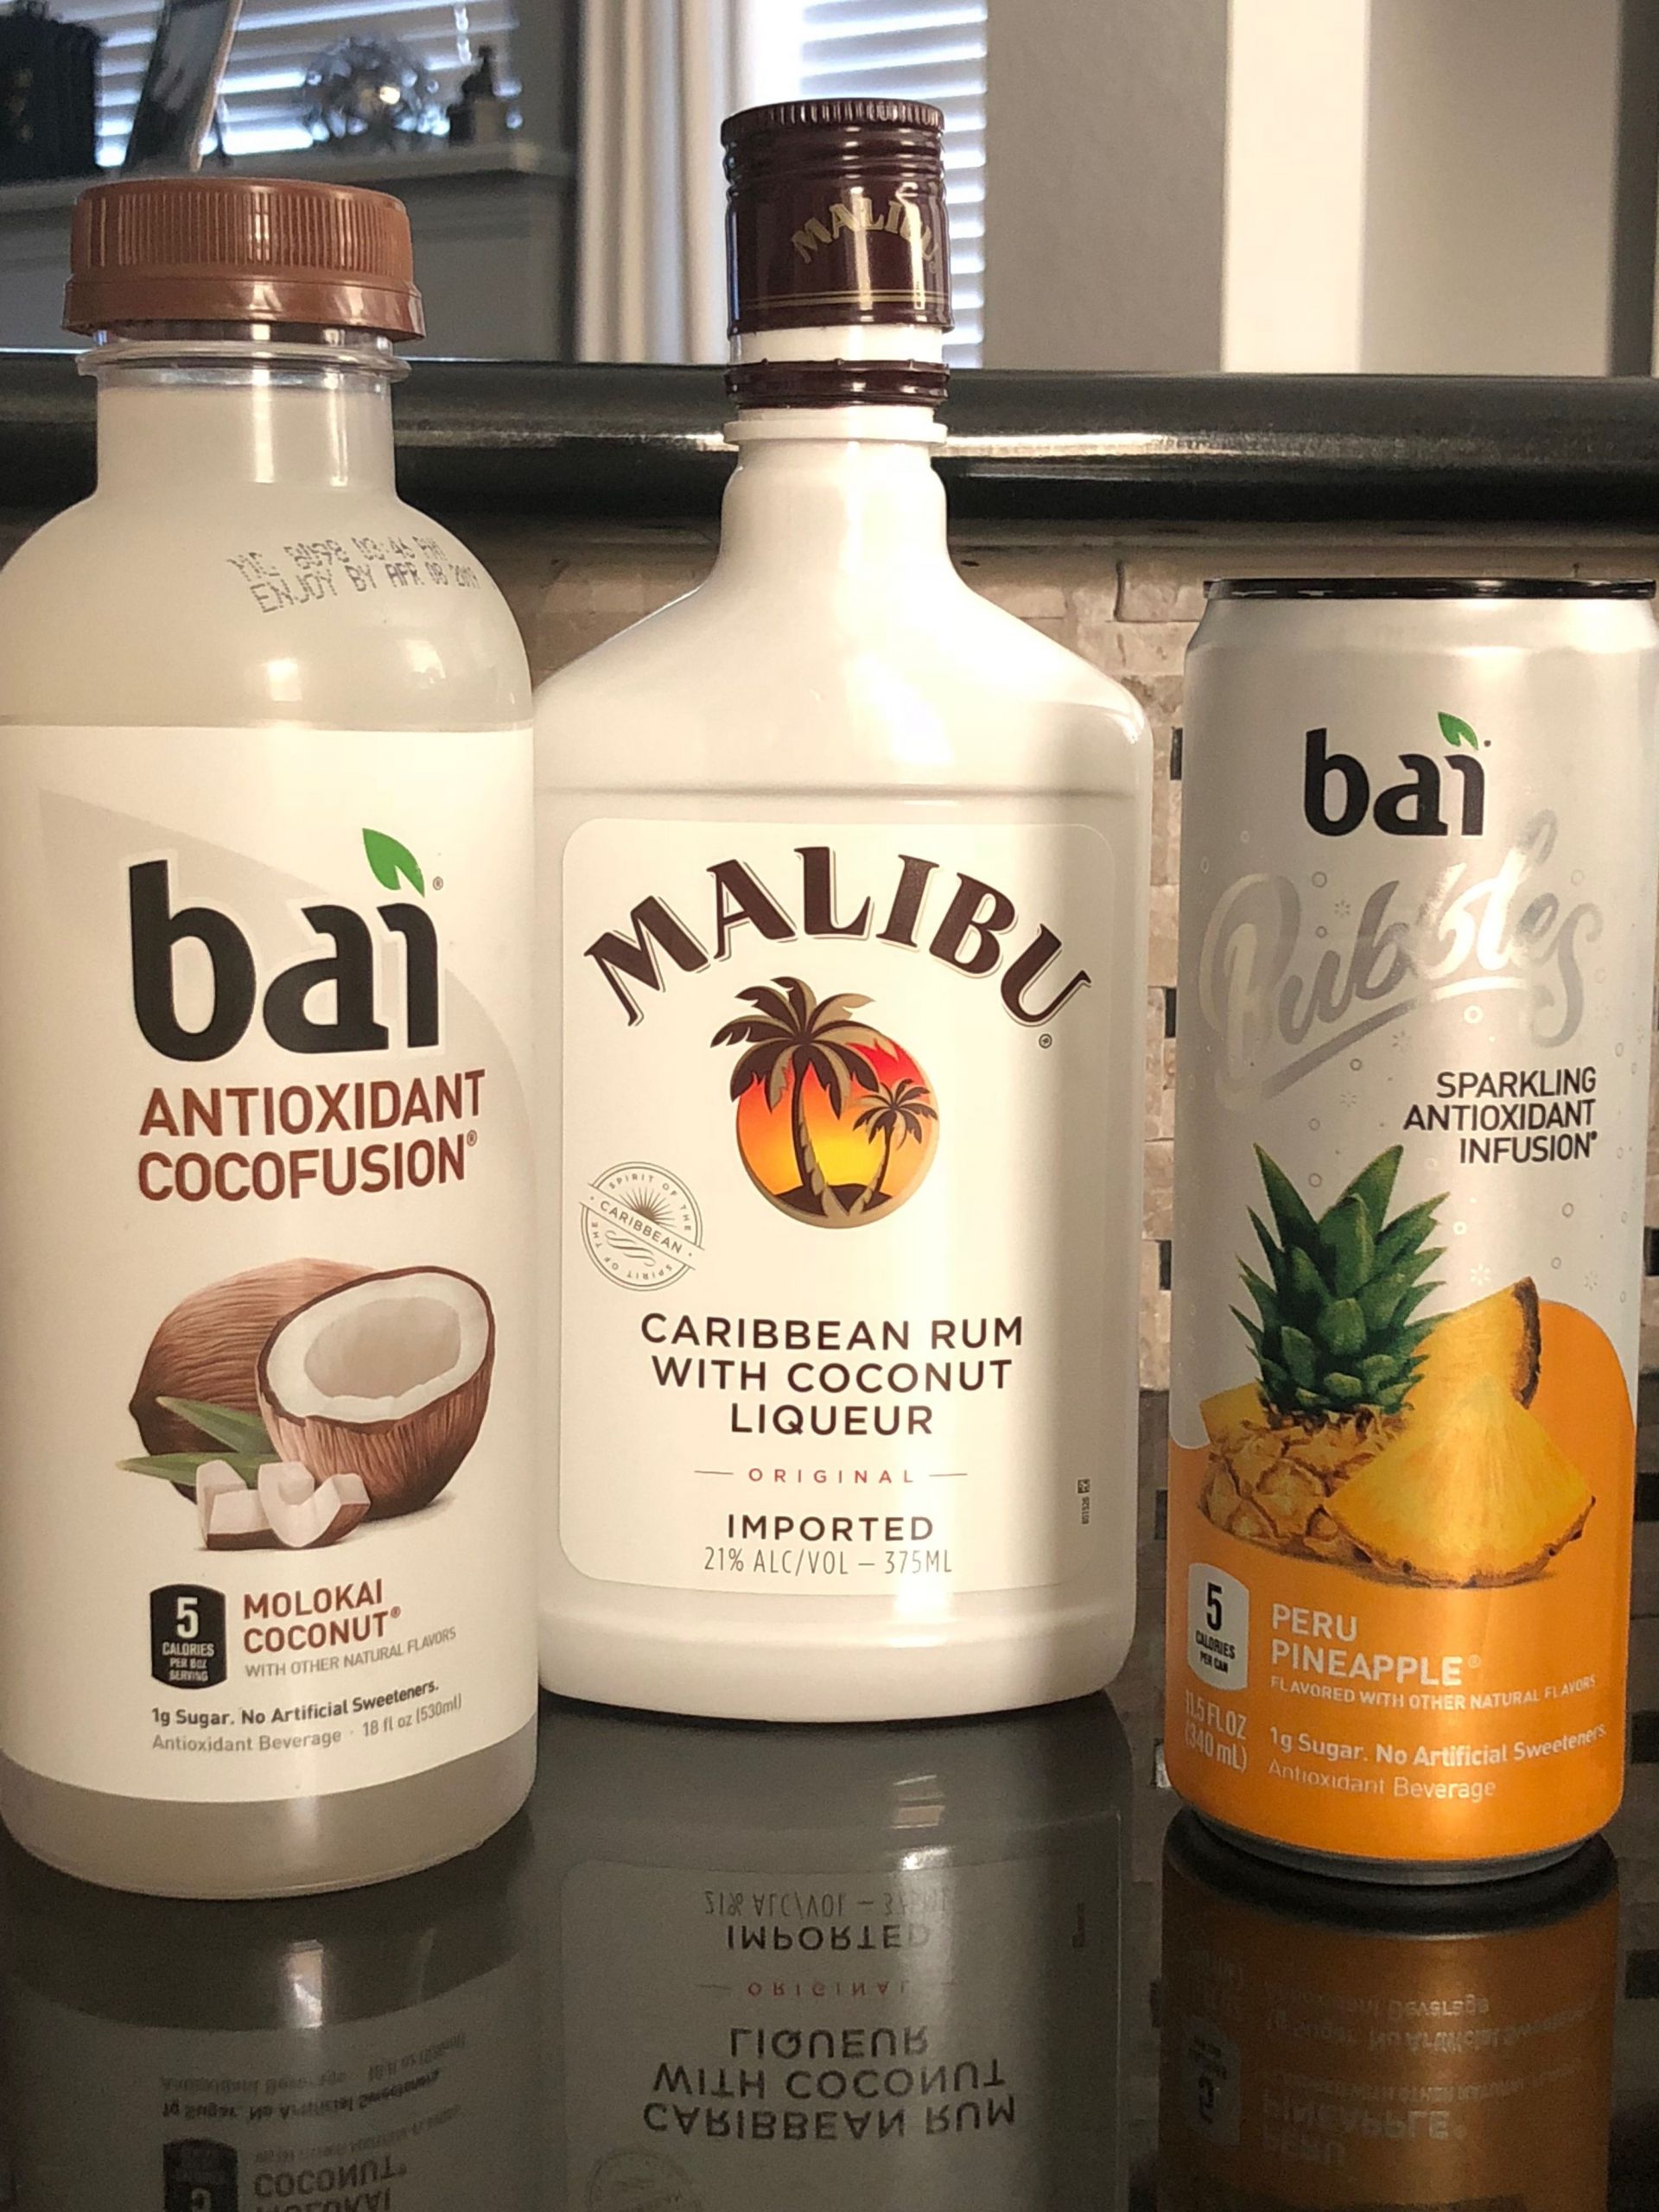 Low Calorie Malibu Rum Drinks
 Bai pina colada